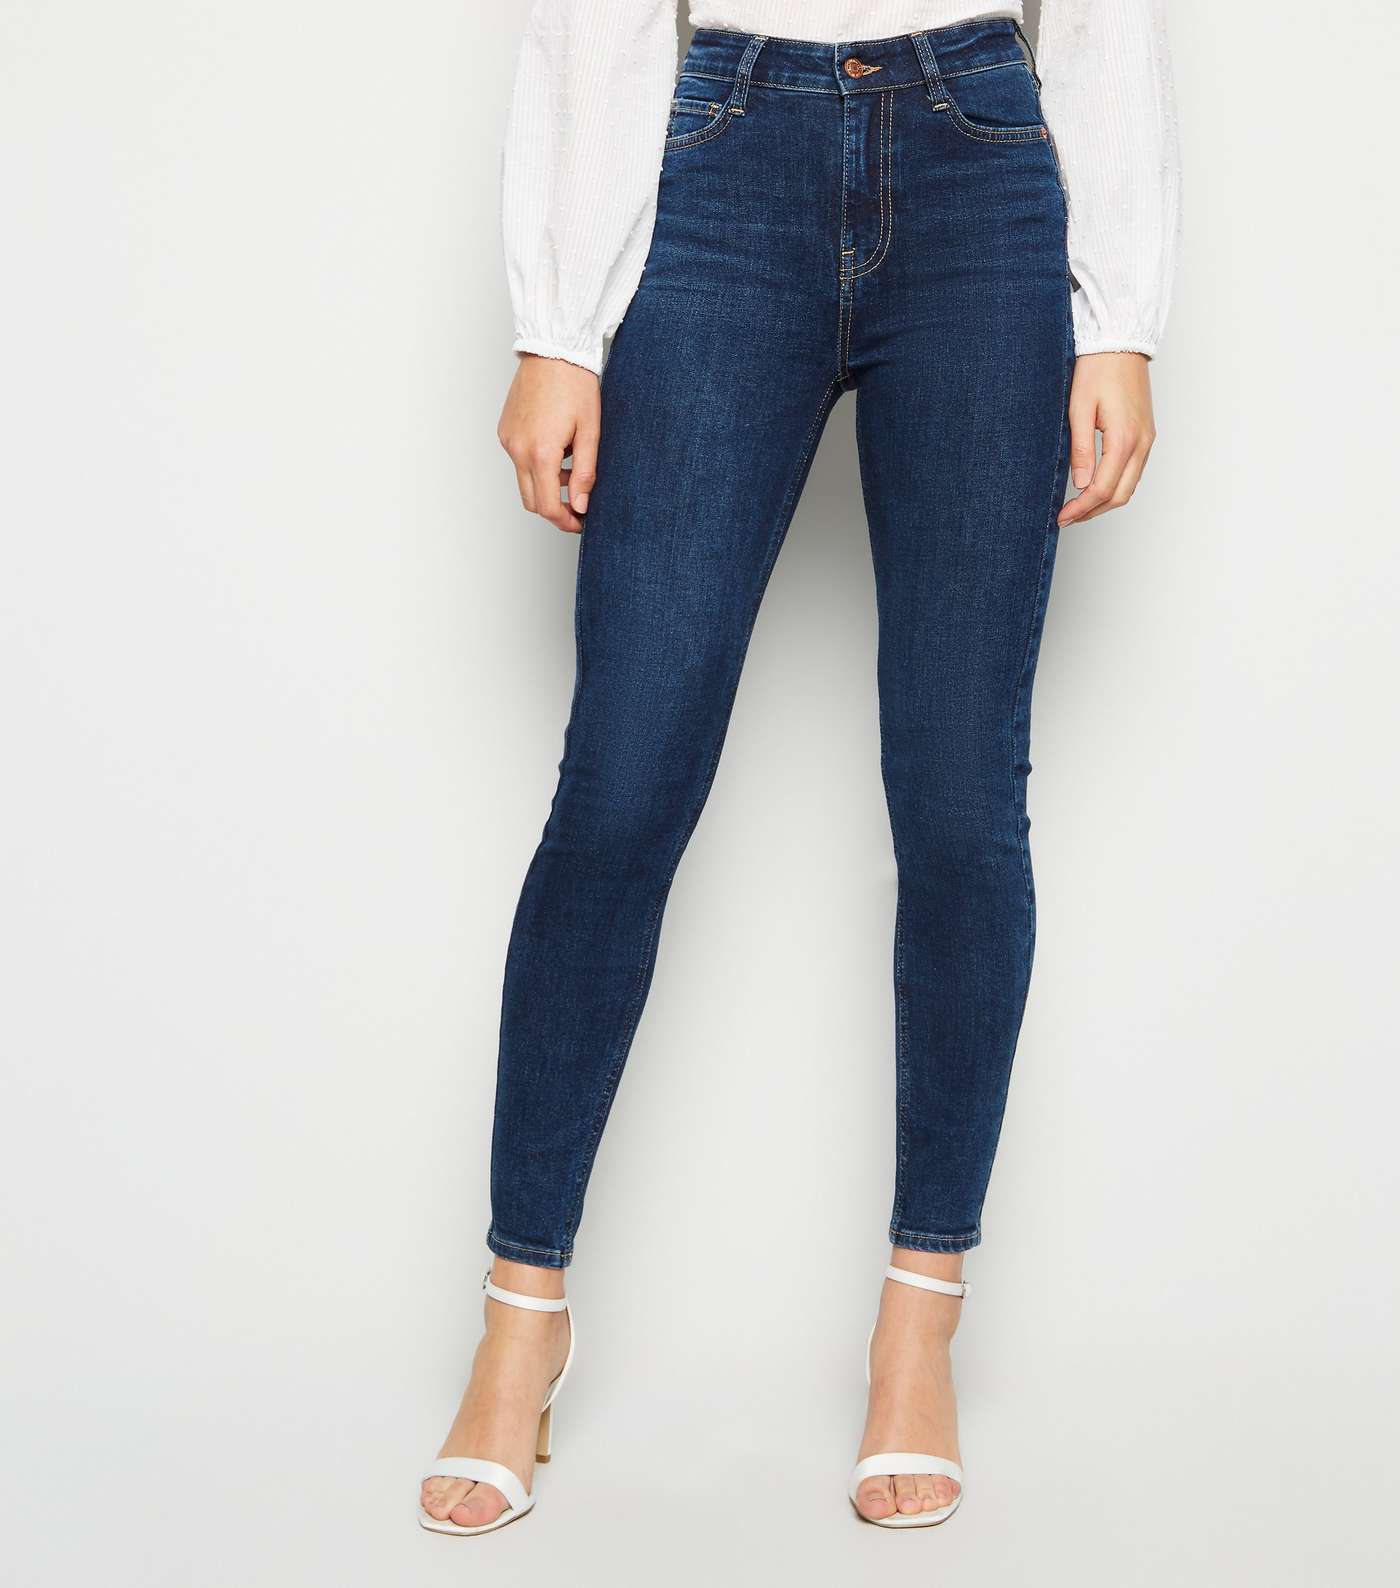 Blue Rinse Wash 'Lift & Shape' Jenna Skinny Jeans Image 2